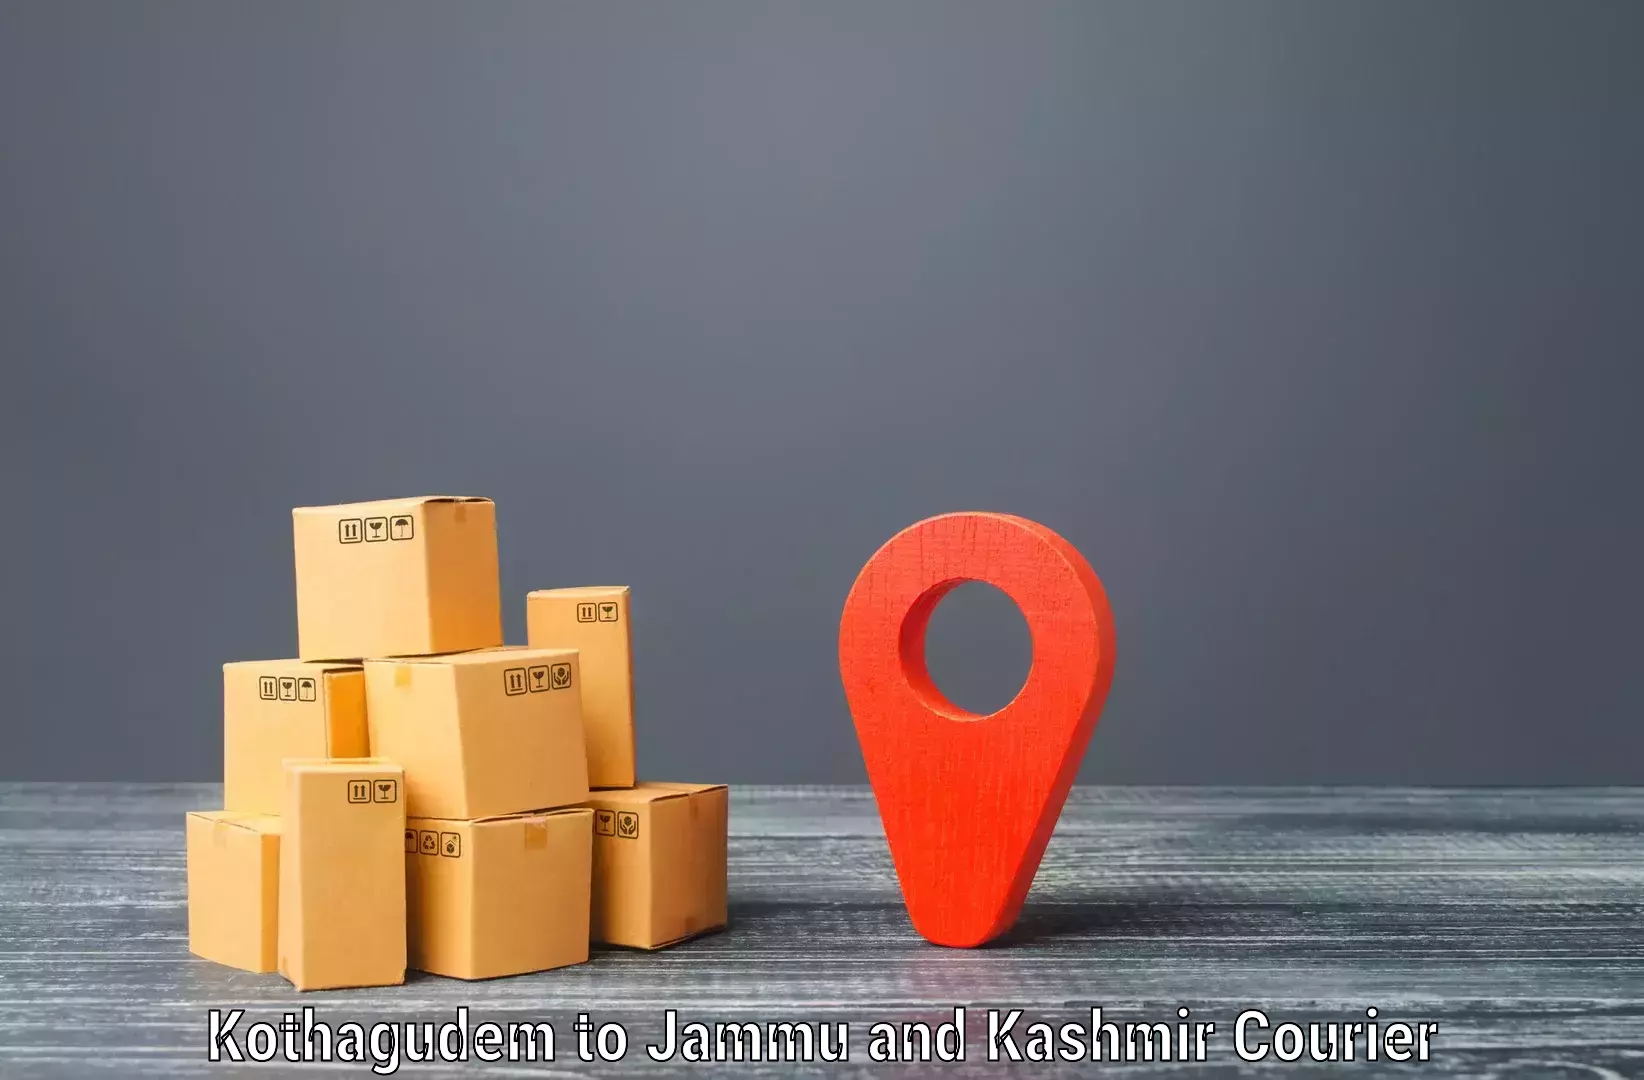 Advanced tracking systems Kothagudem to Srinagar Kashmir